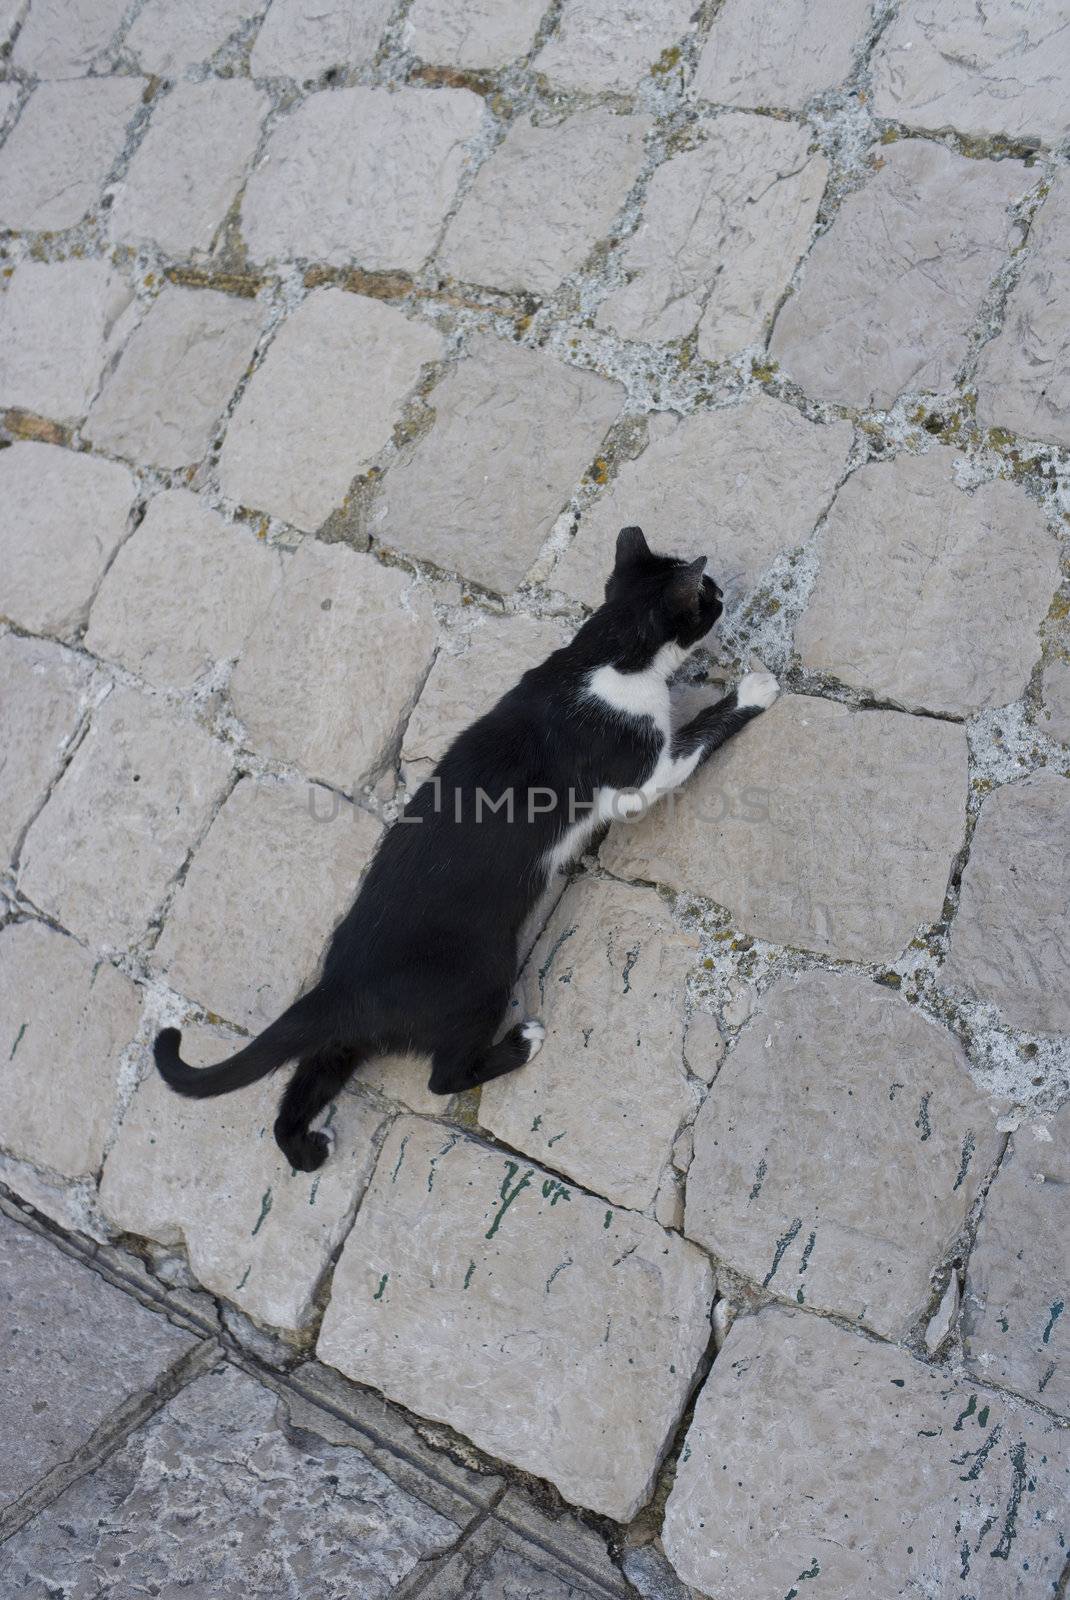 Black Croatian cat climbing a steep wall - Dubrovnik.